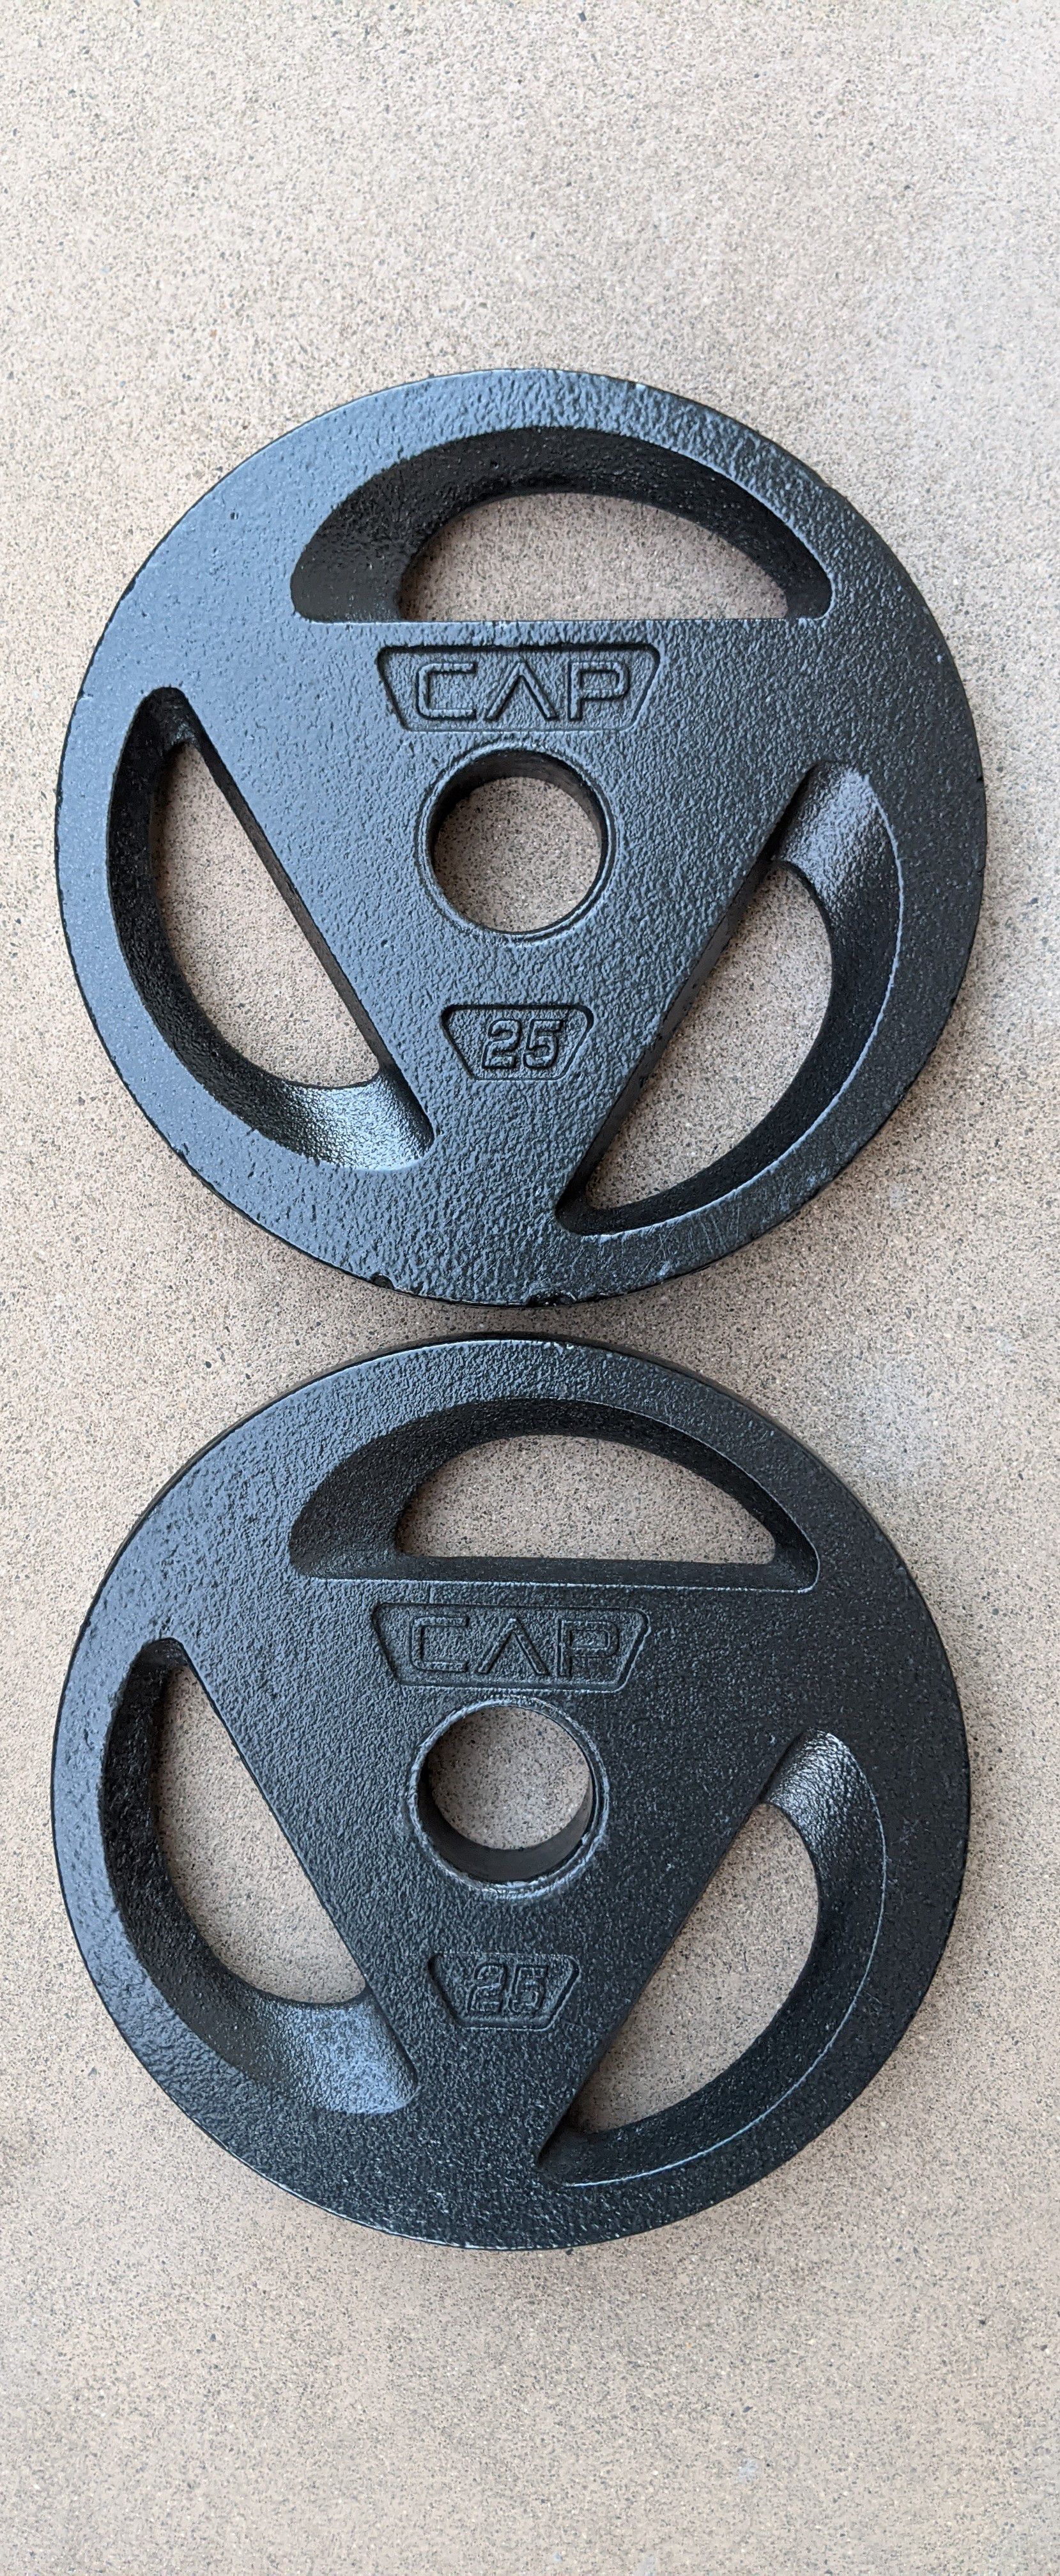 💪 NEW 25 lb Olympic Plates (Pair) - Cast Iron